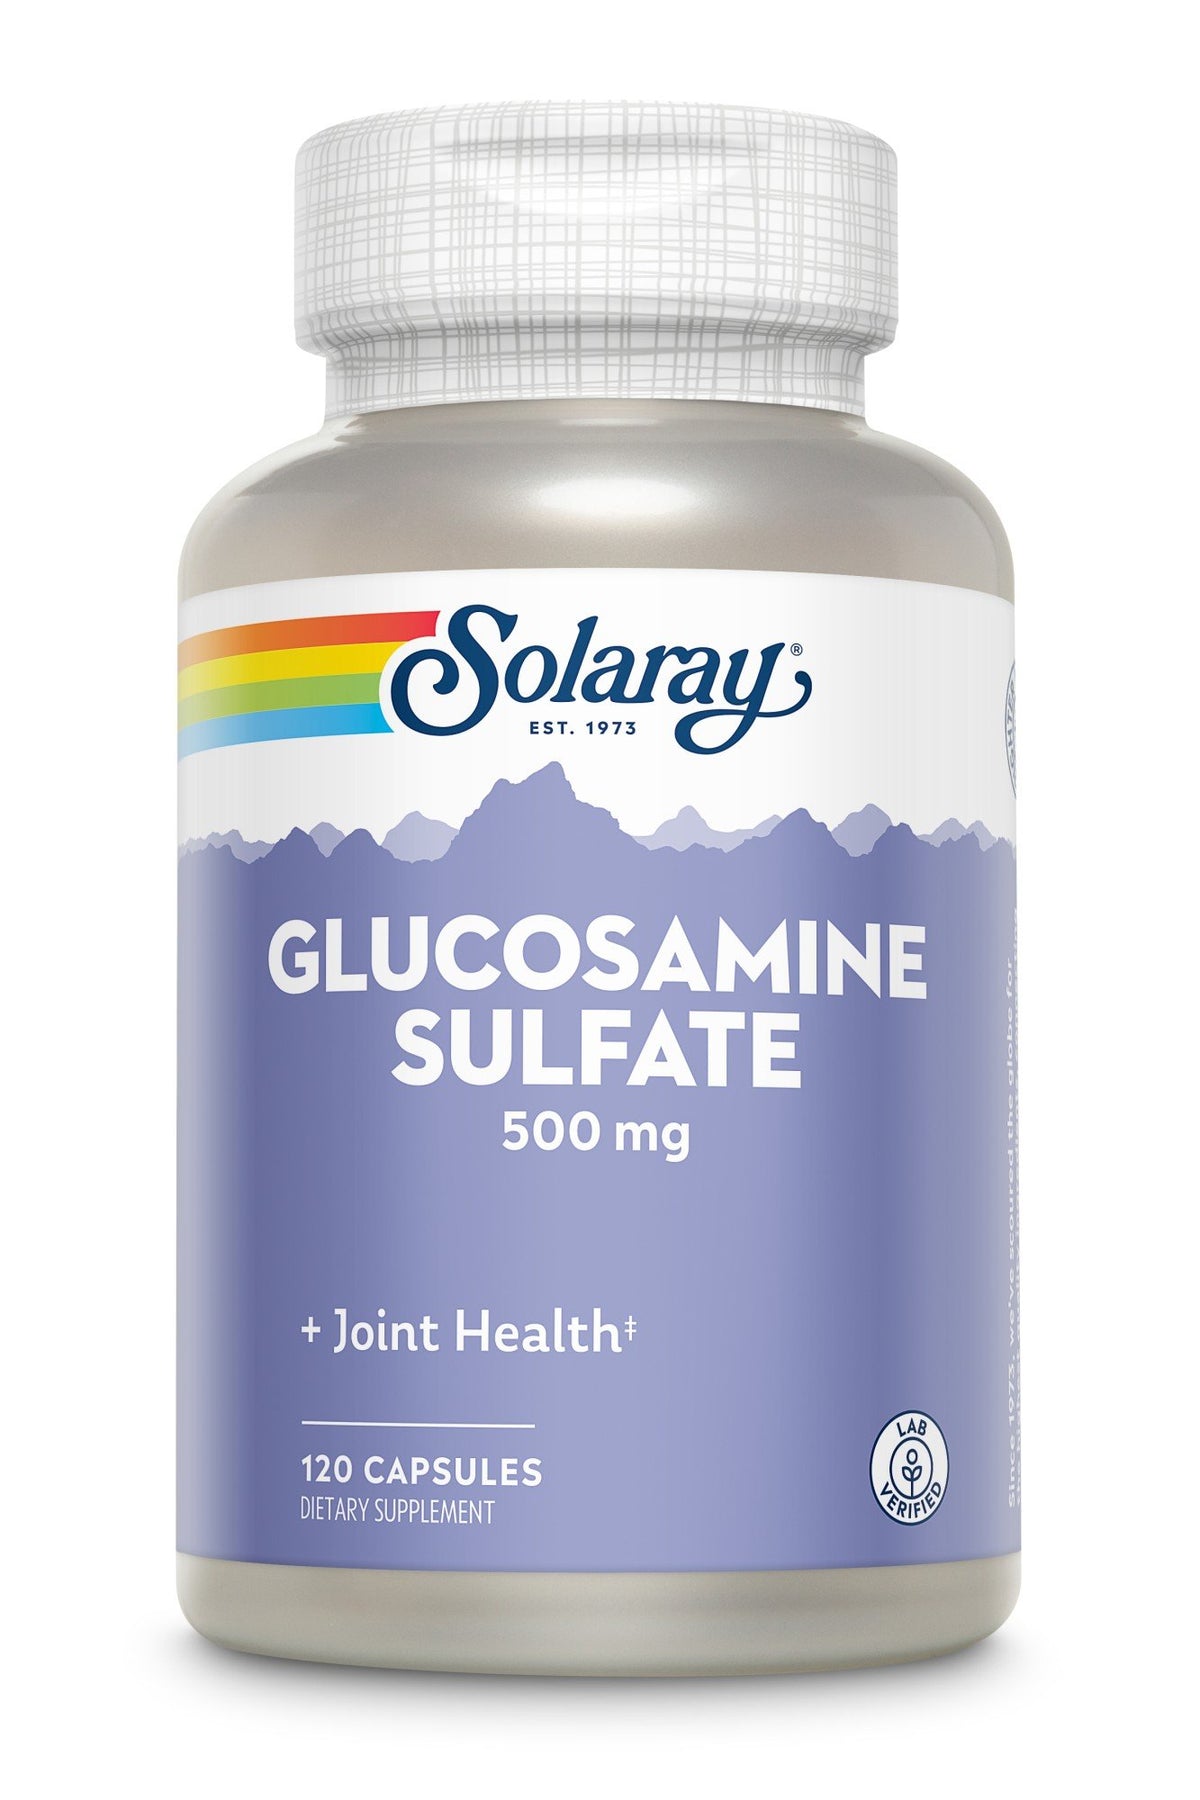 Solaray Glucosamine Sulfate 500mg 120 Capsule